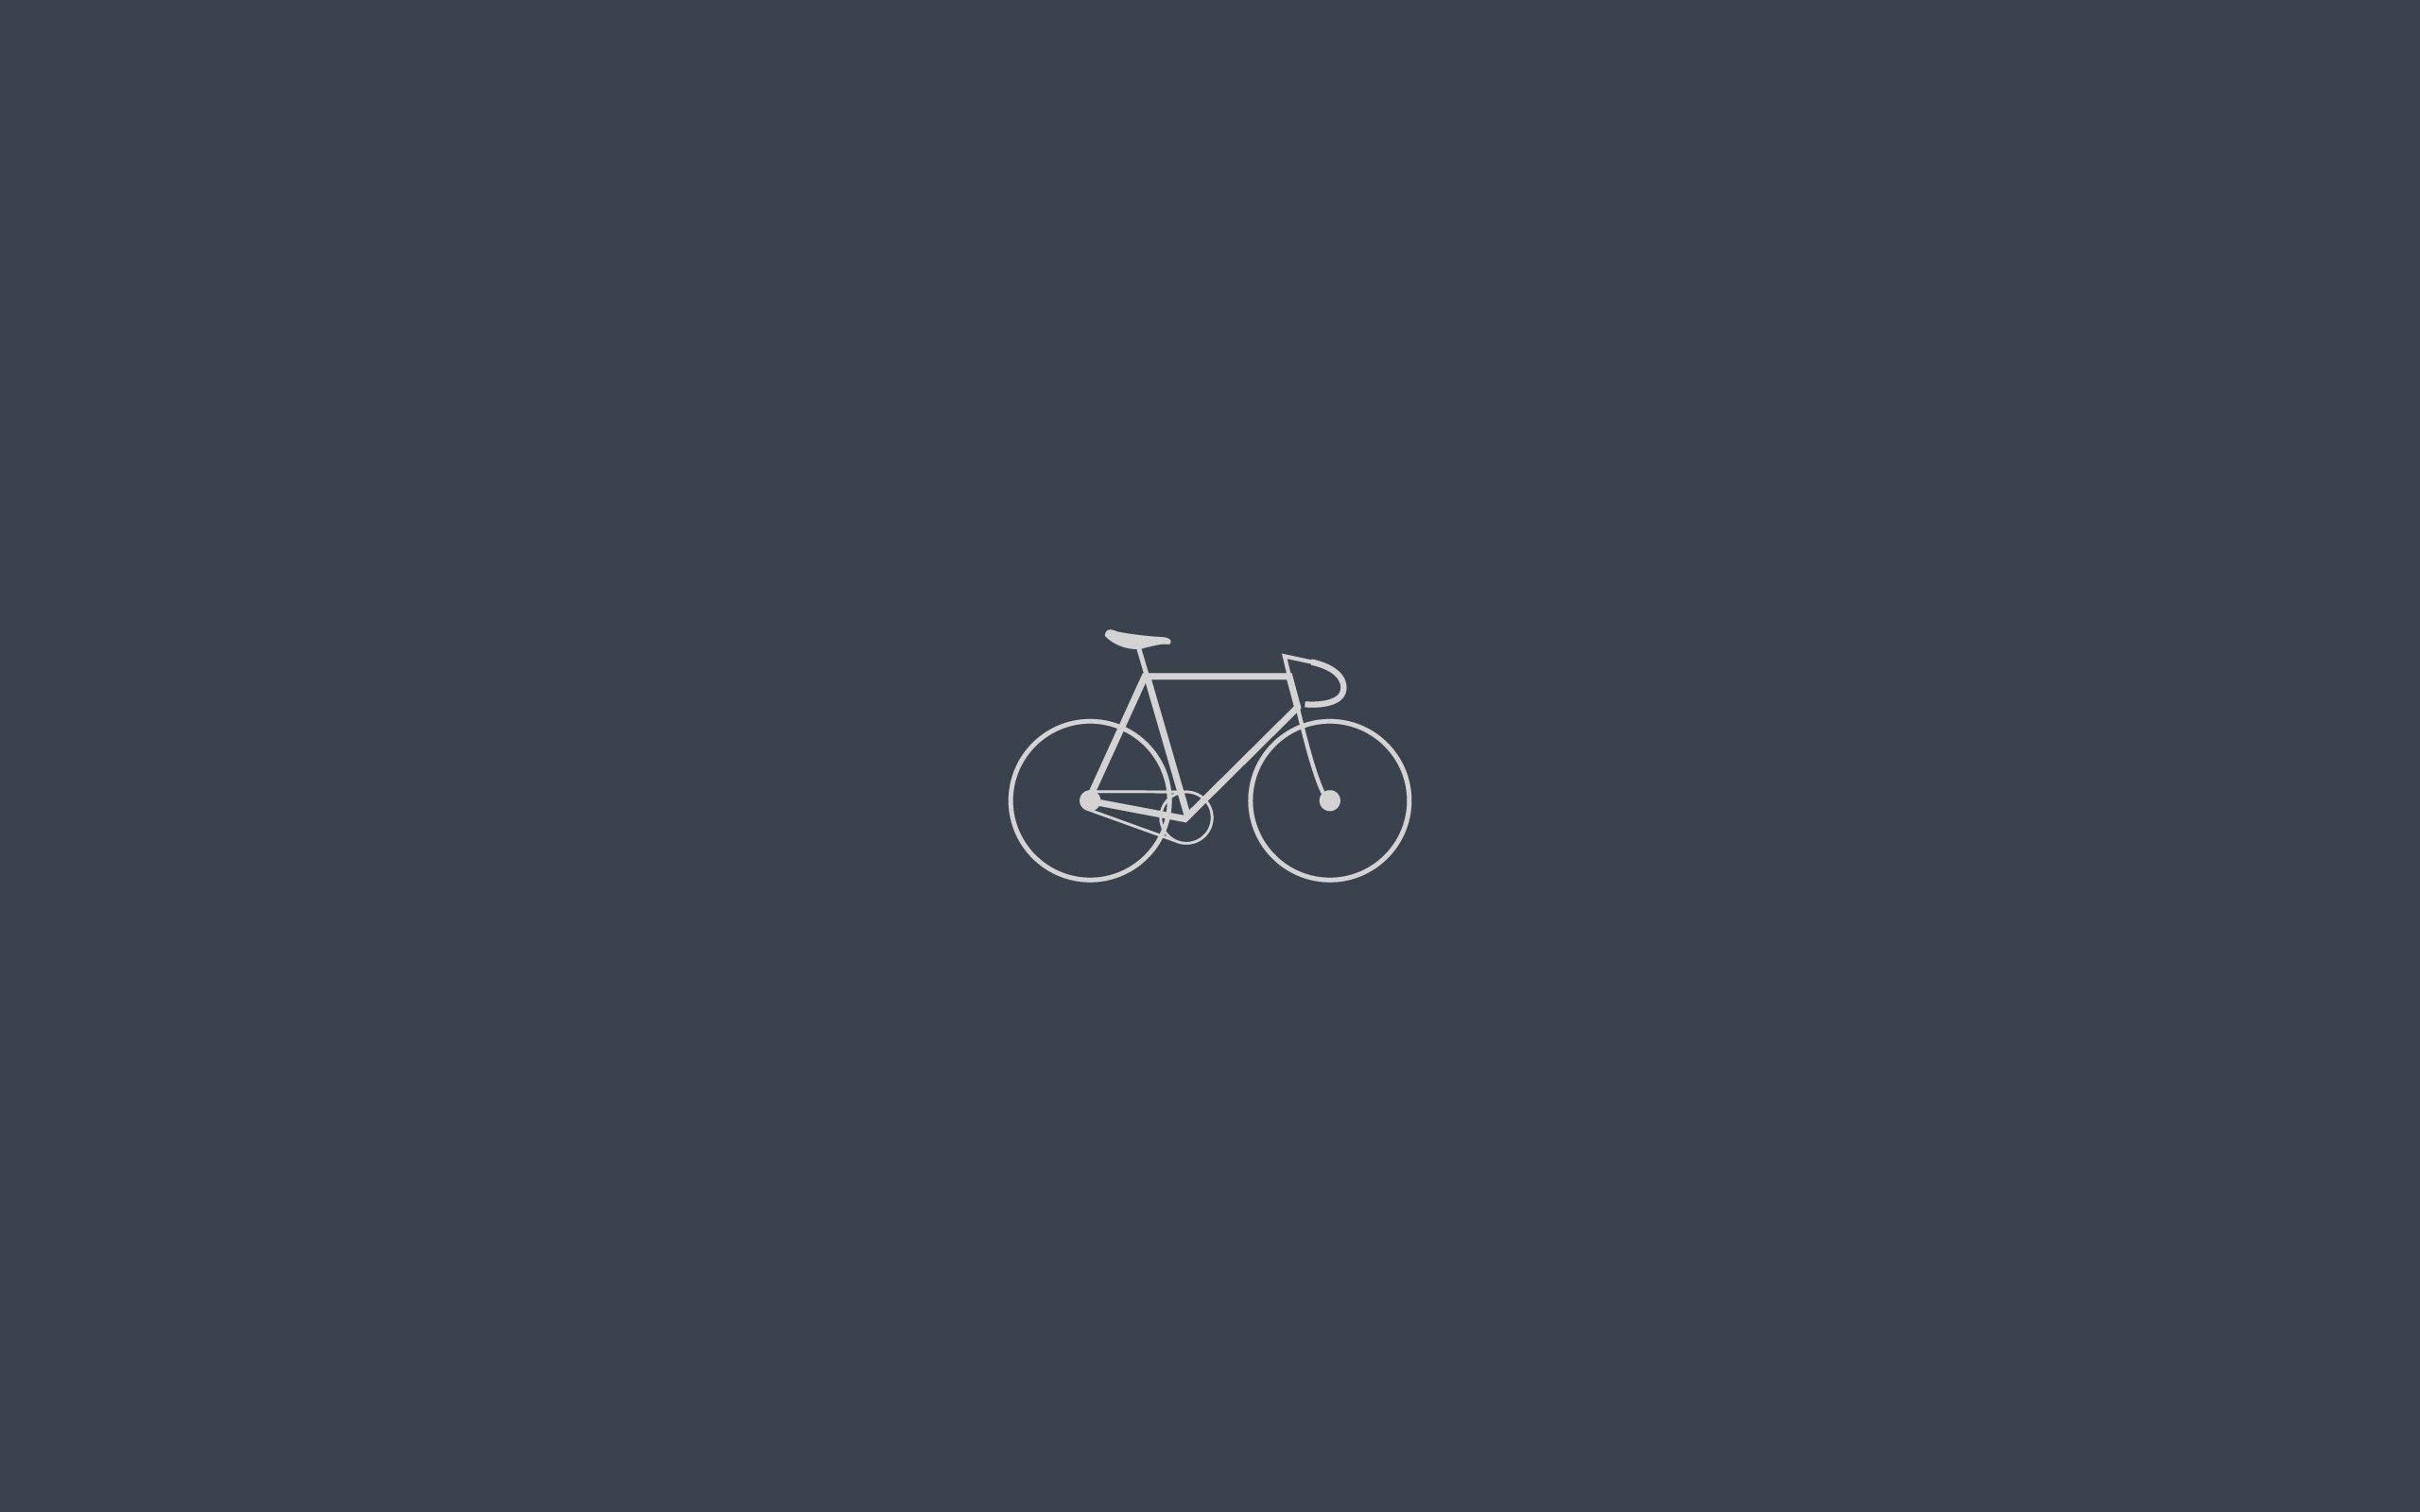 Wallpaper.wiki Minimalistic Bicycles Artwork Simple 2560x1600 PIC